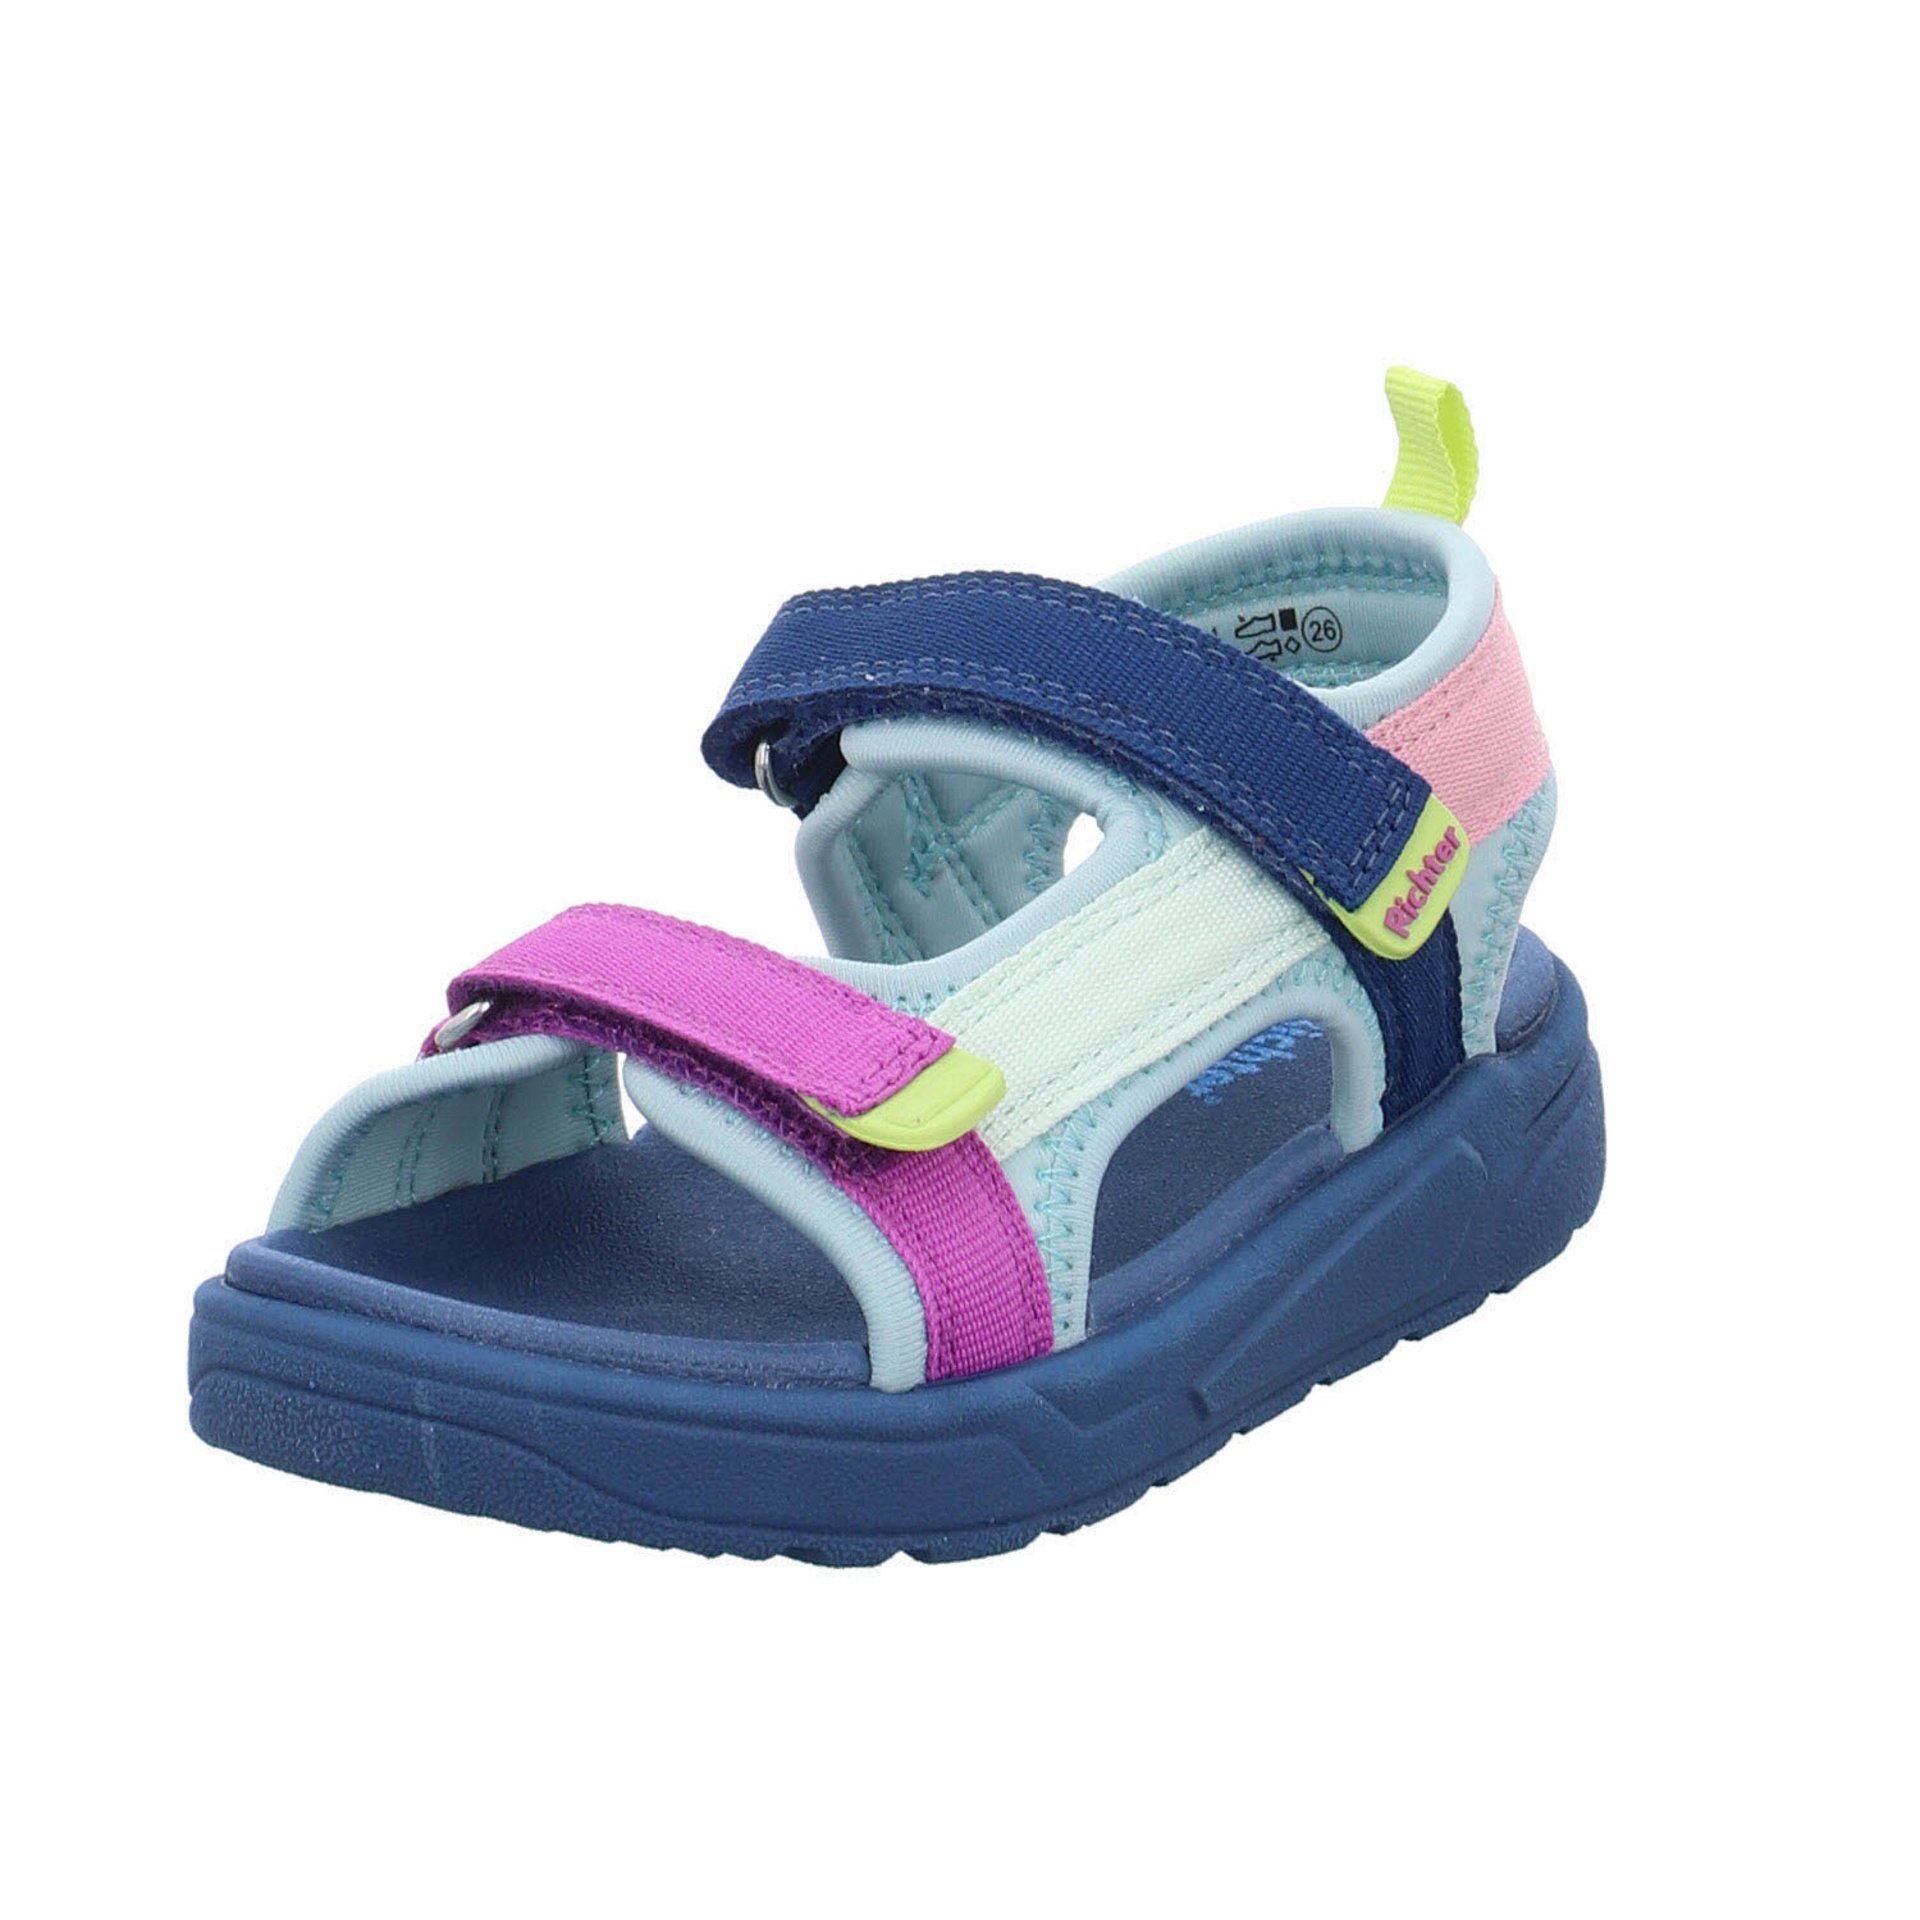 Richter Mädchen Sandalen Schuhe Sandale Kinderschuhe Sandale Textil blau sonst Kombi